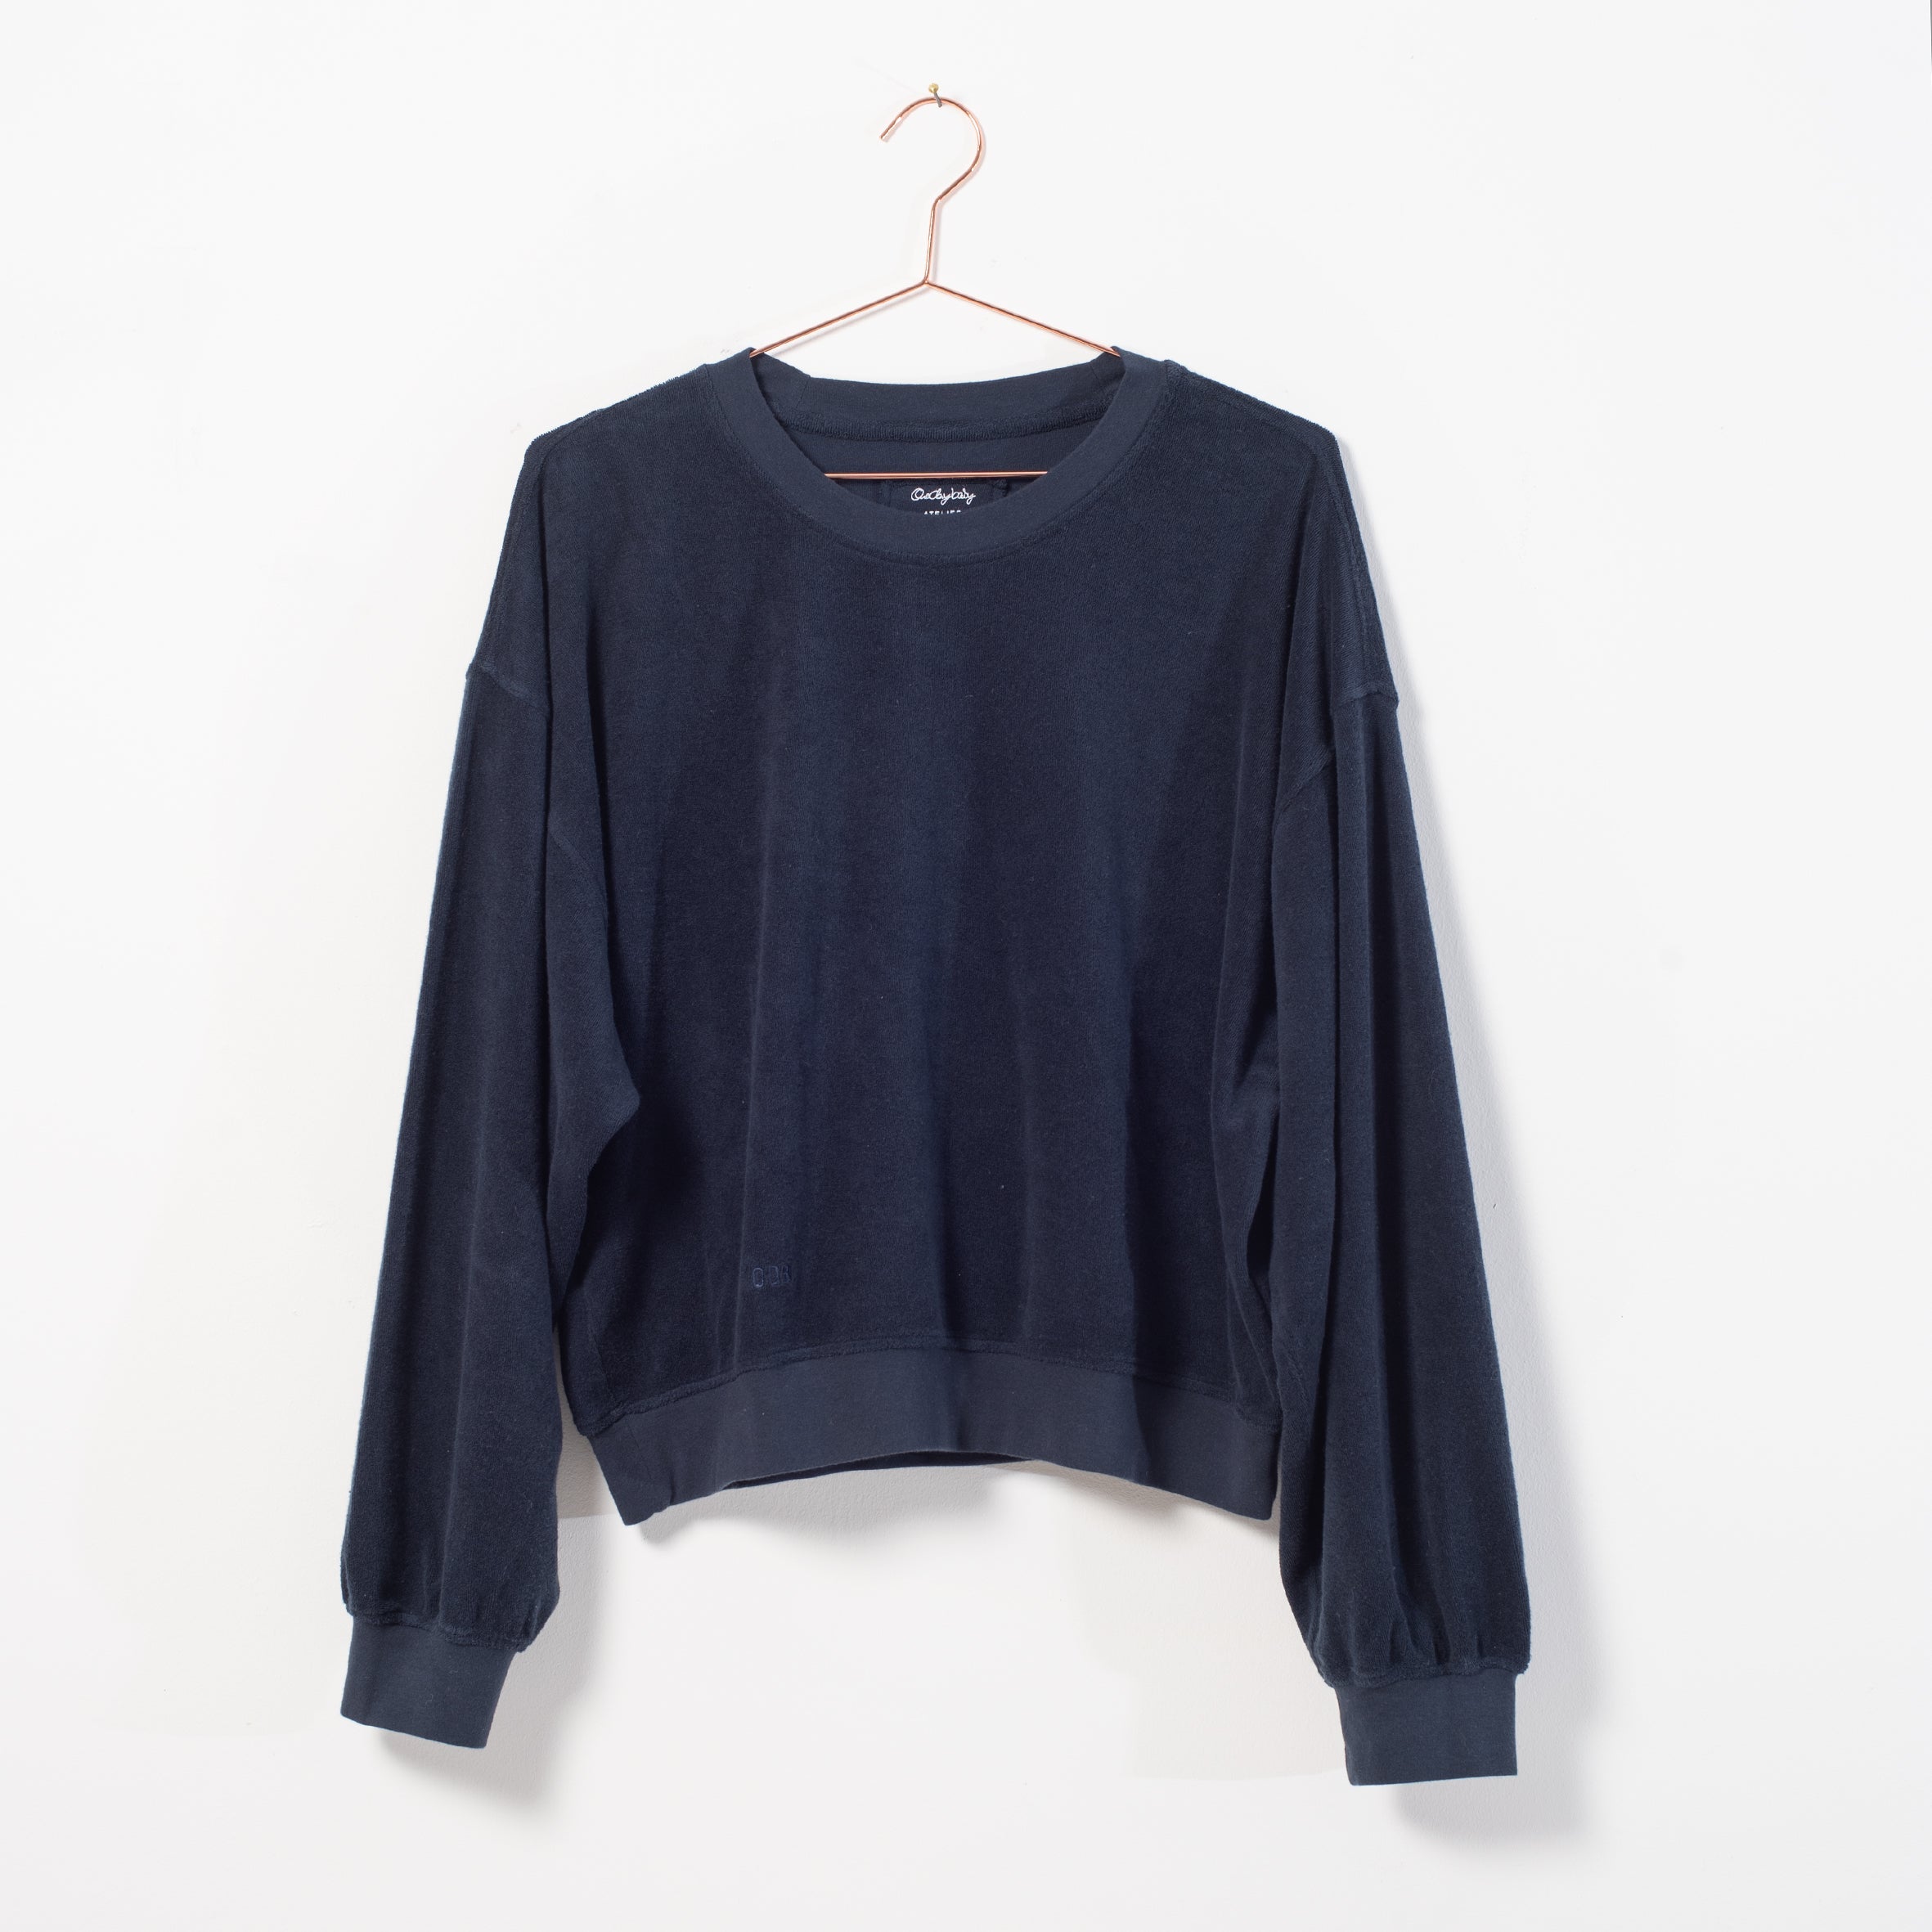 SALE - new favorite Sweater, navy blue